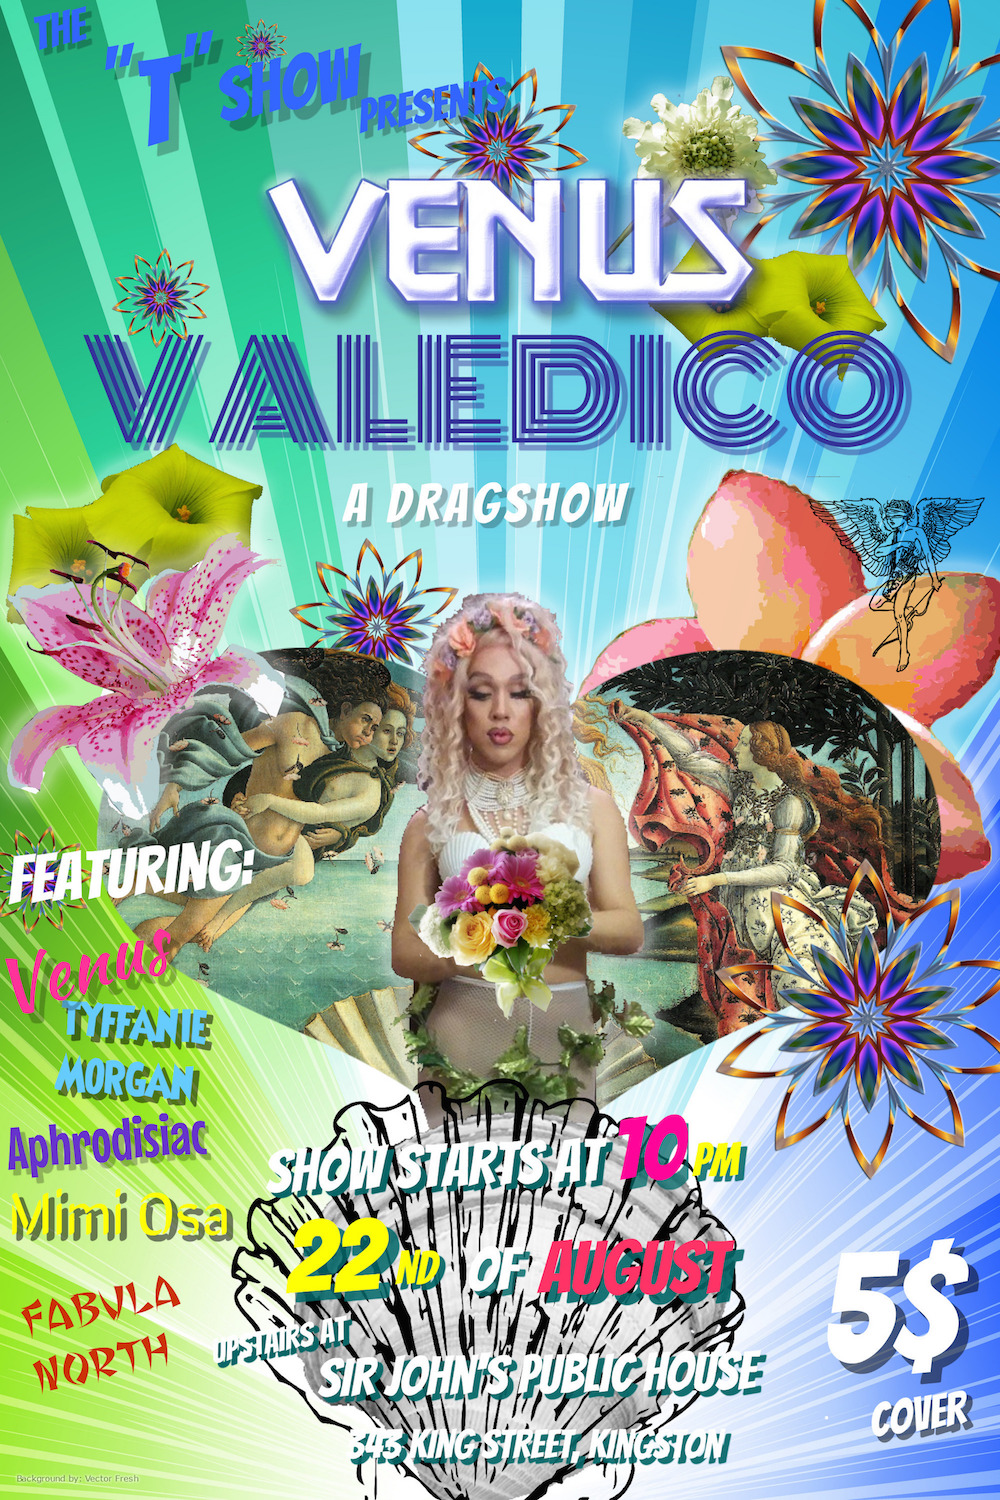 Poster for Venus Valedico - Details in Post